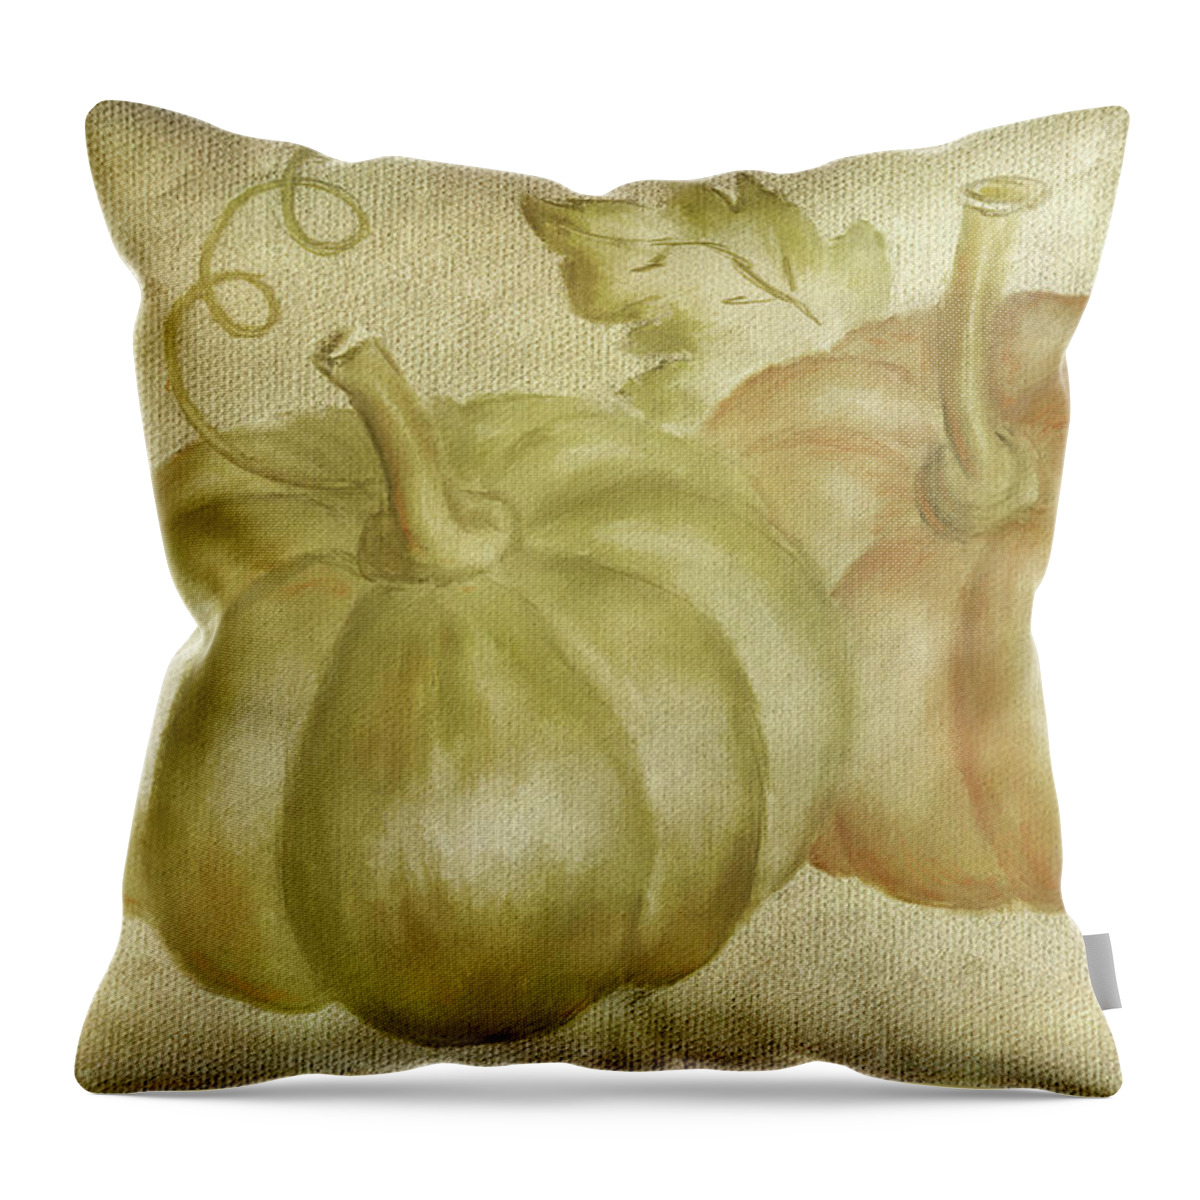 Pumpkin Throw Pillow featuring the digital art Autumn's Gifts by Lois Bryan